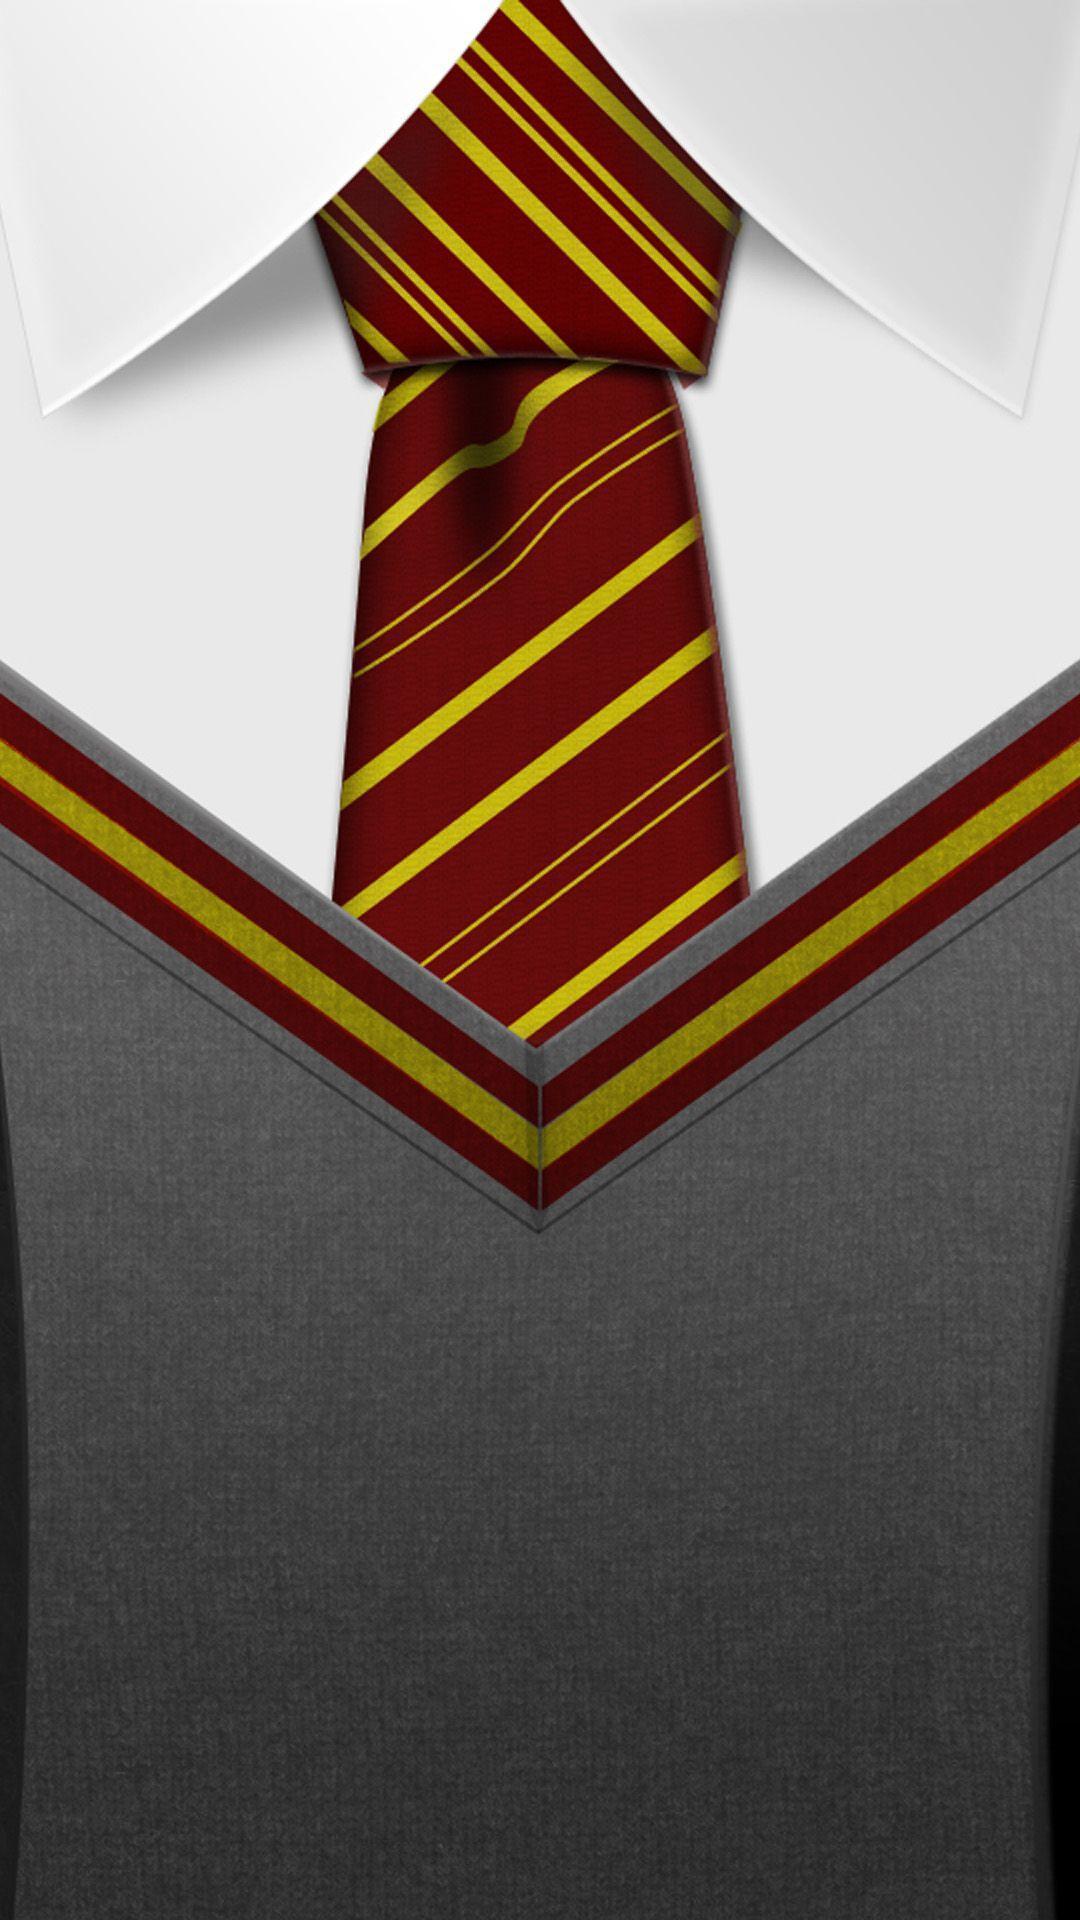 Harry Potter iPhone Wallpaper